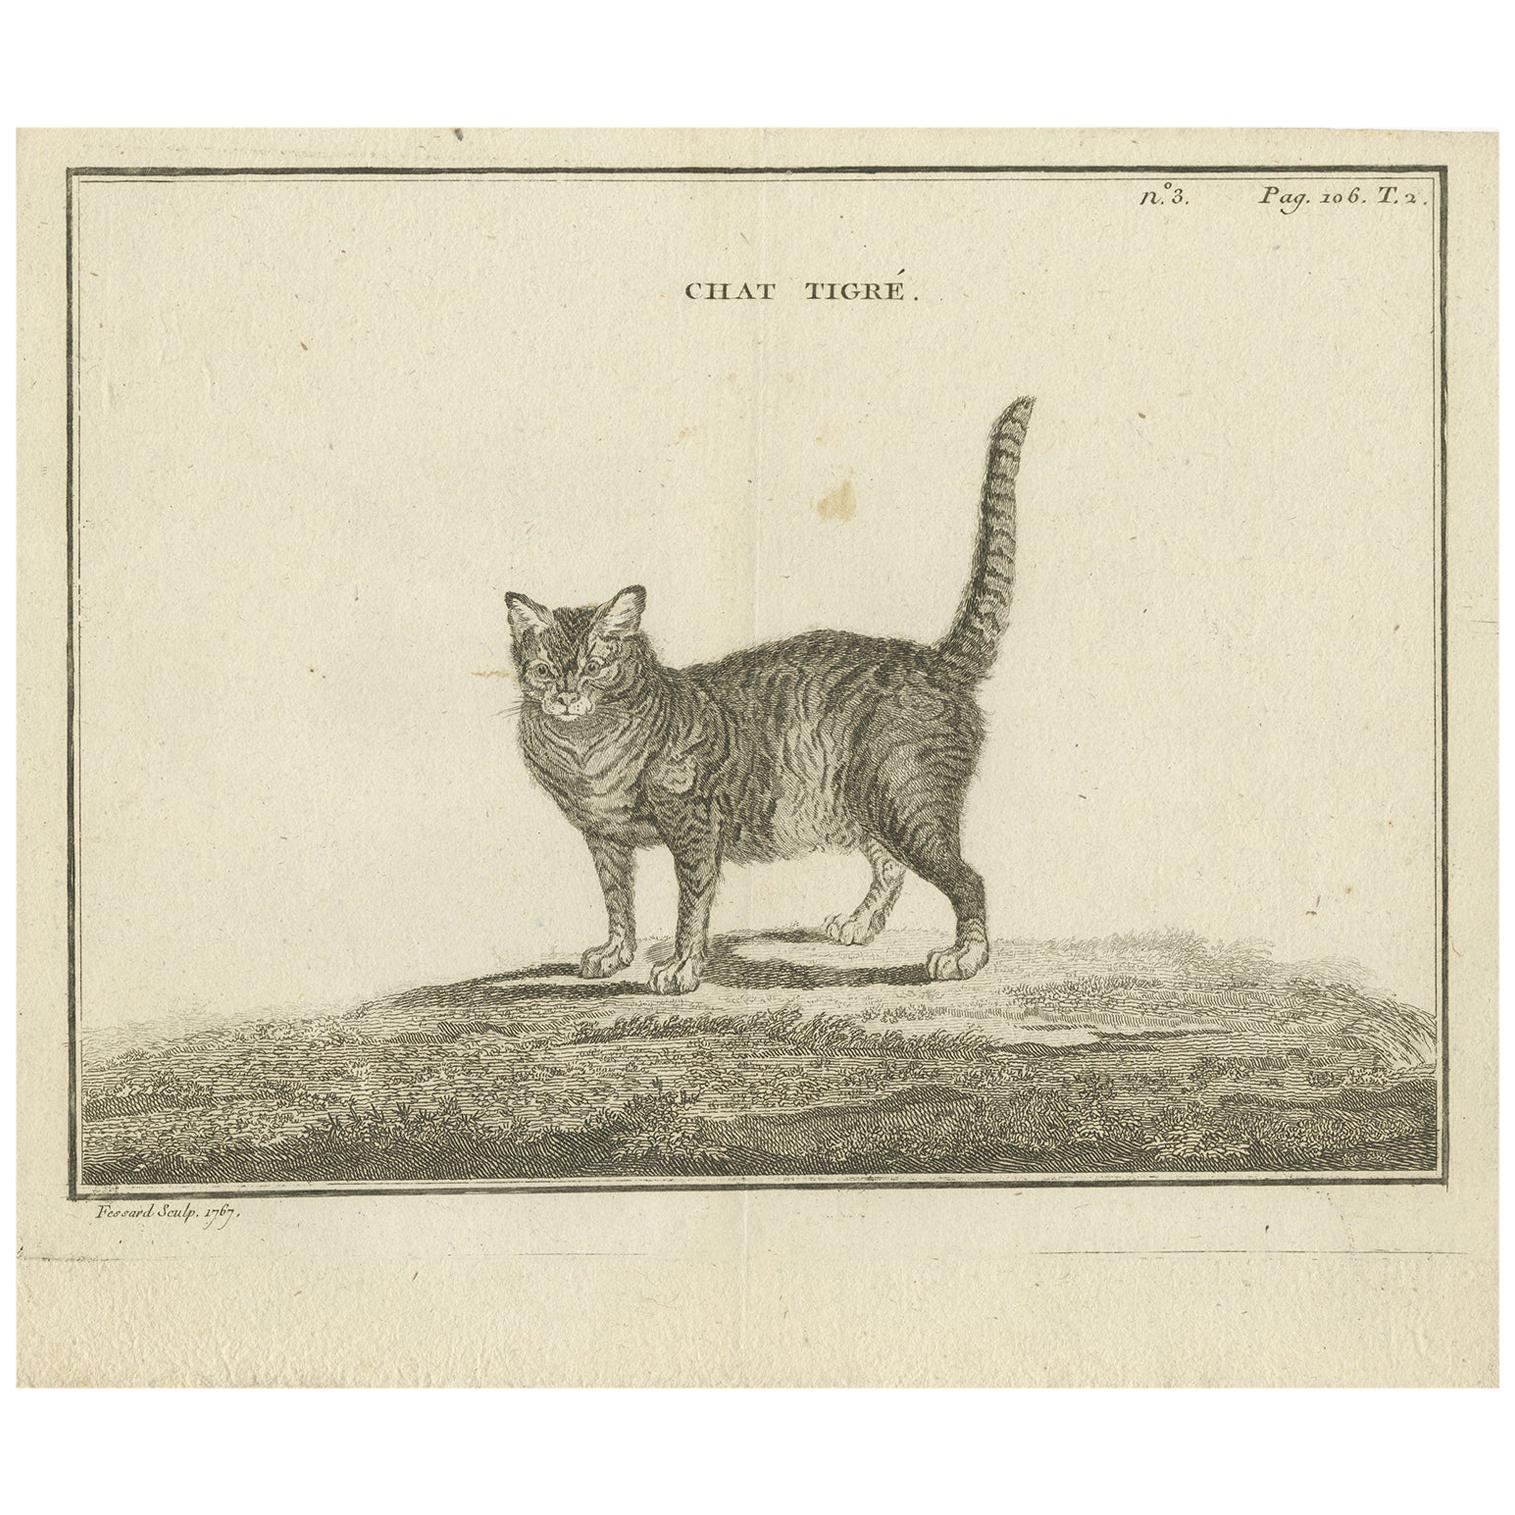 Antique Print of an Oncilla Cat by Fessard, 1819